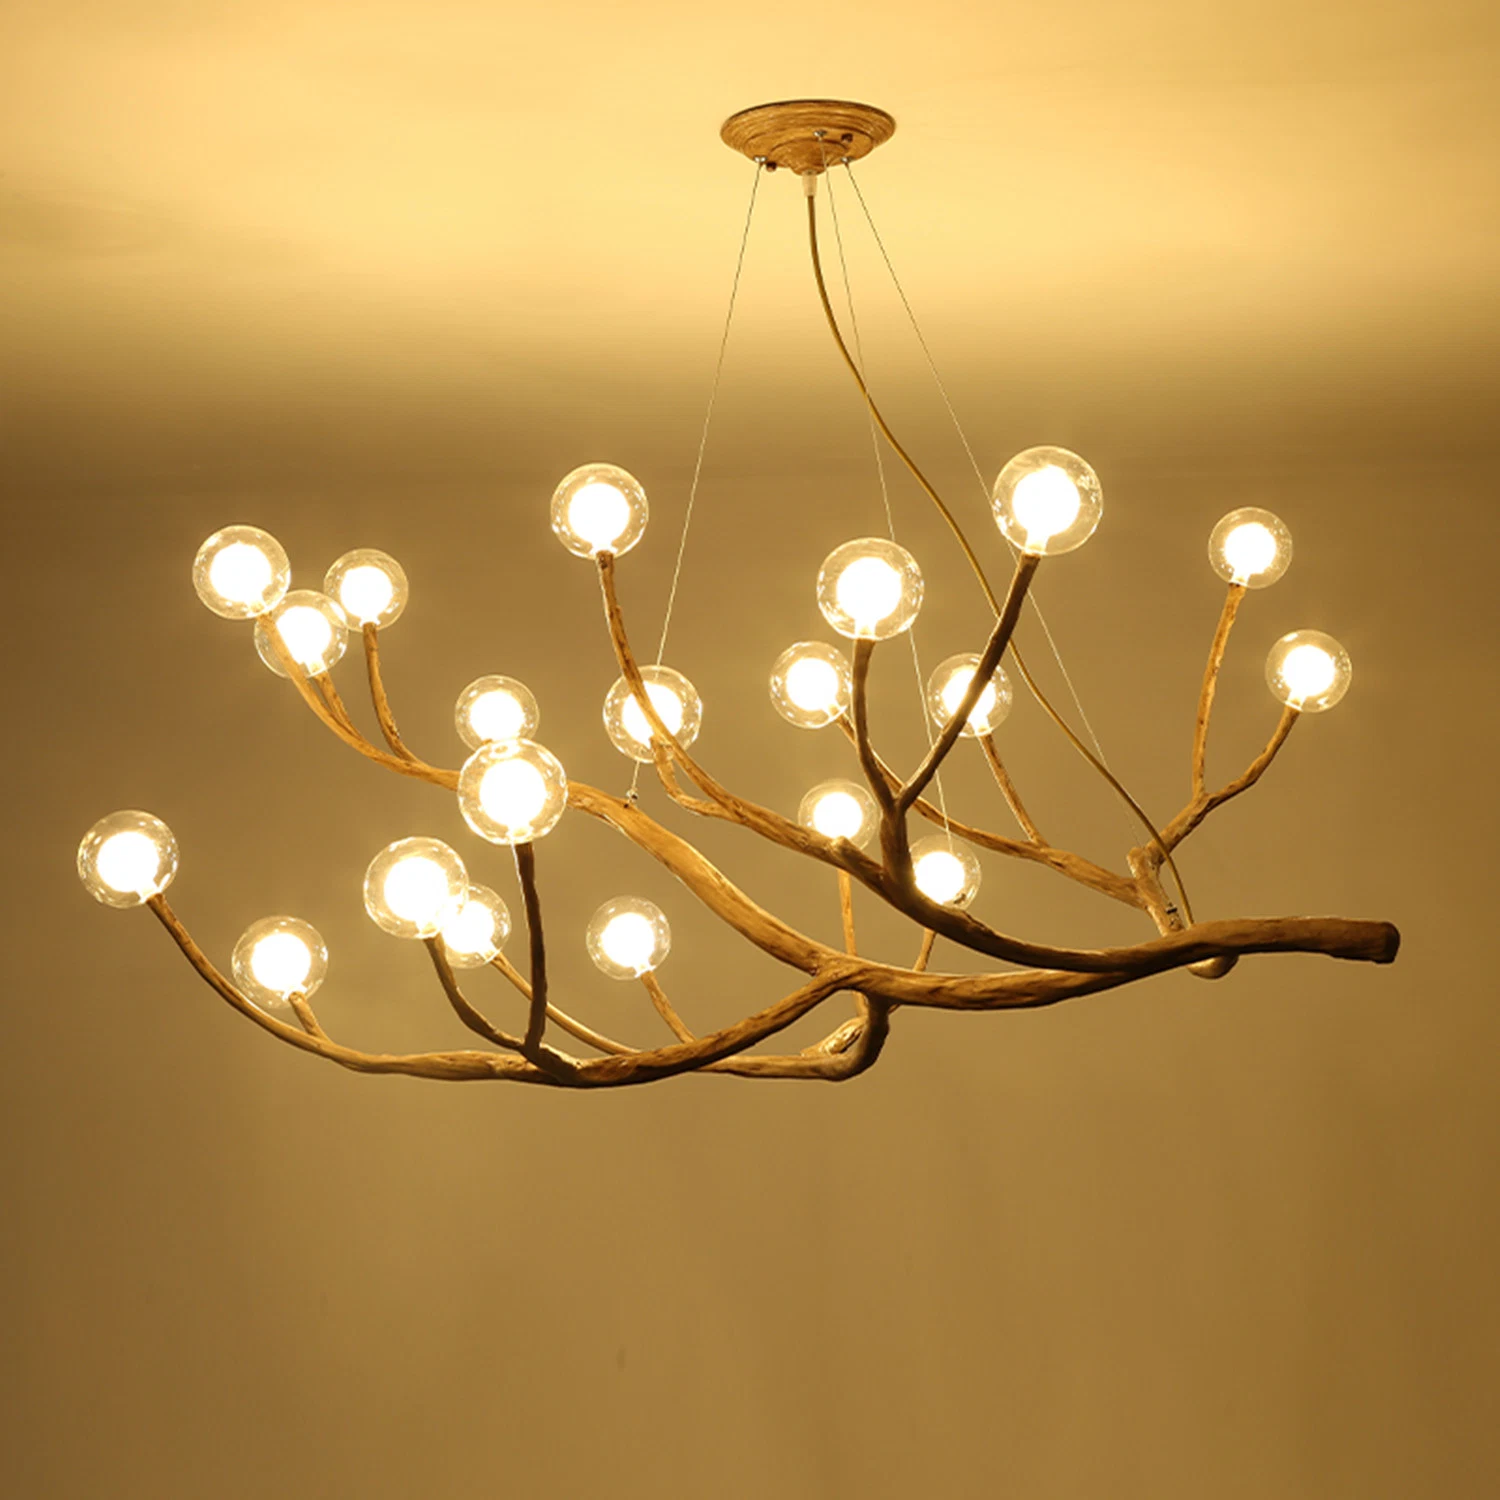 Wooden Tree Branch Decorative Lustre Pendant Home Chandelier Lighting (WH-CI-107)